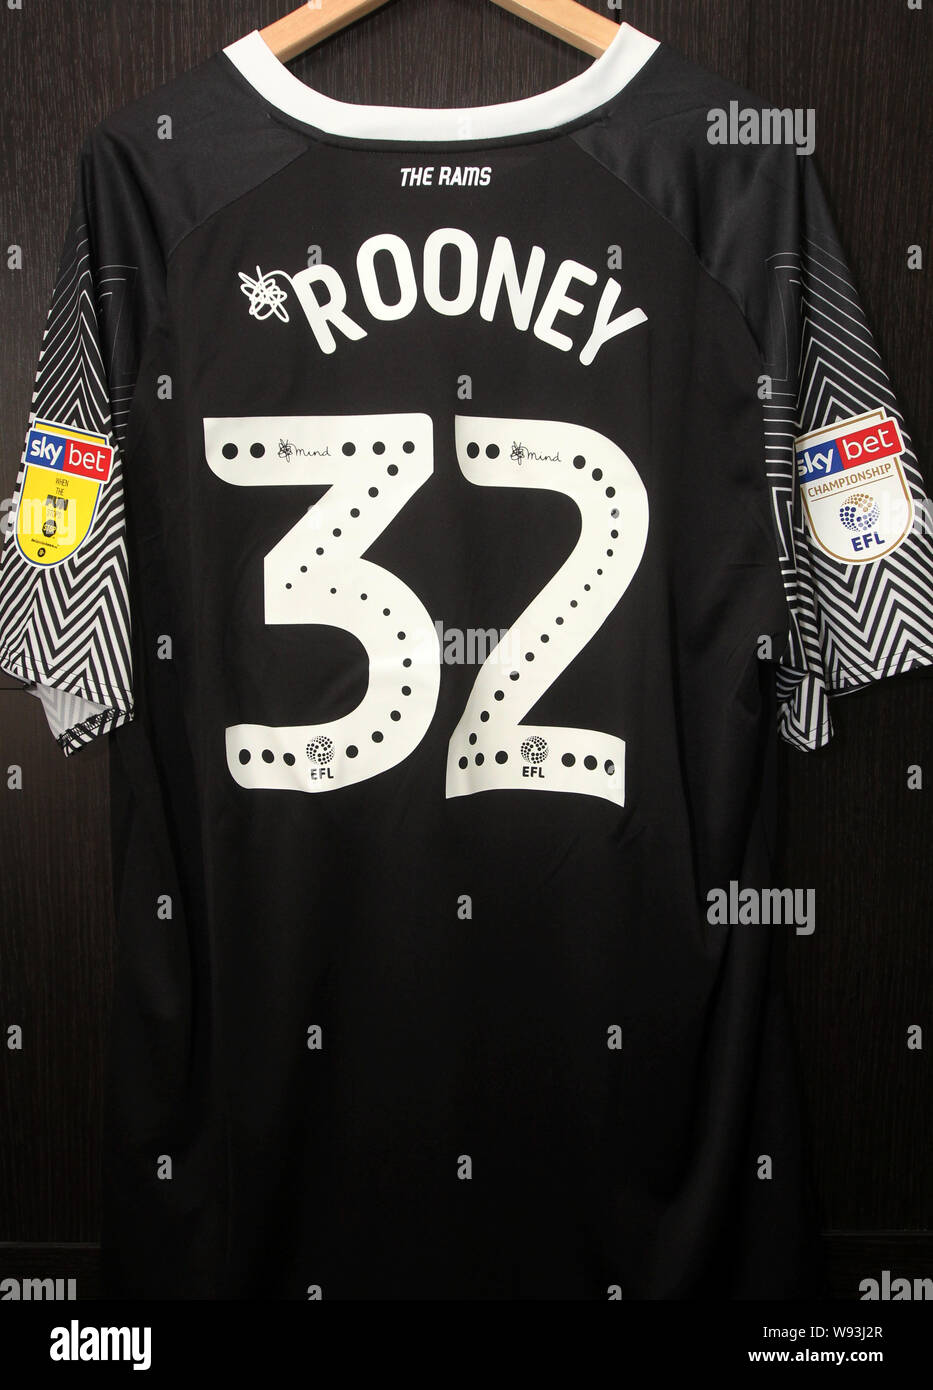 Derby County FC offizielle Replica Kit mit dem Wayne Rooney Nummer 32 Shirt mit Sponsoren 32 Rot. Auch Skybet Meisterschaft Logos. Stockfoto